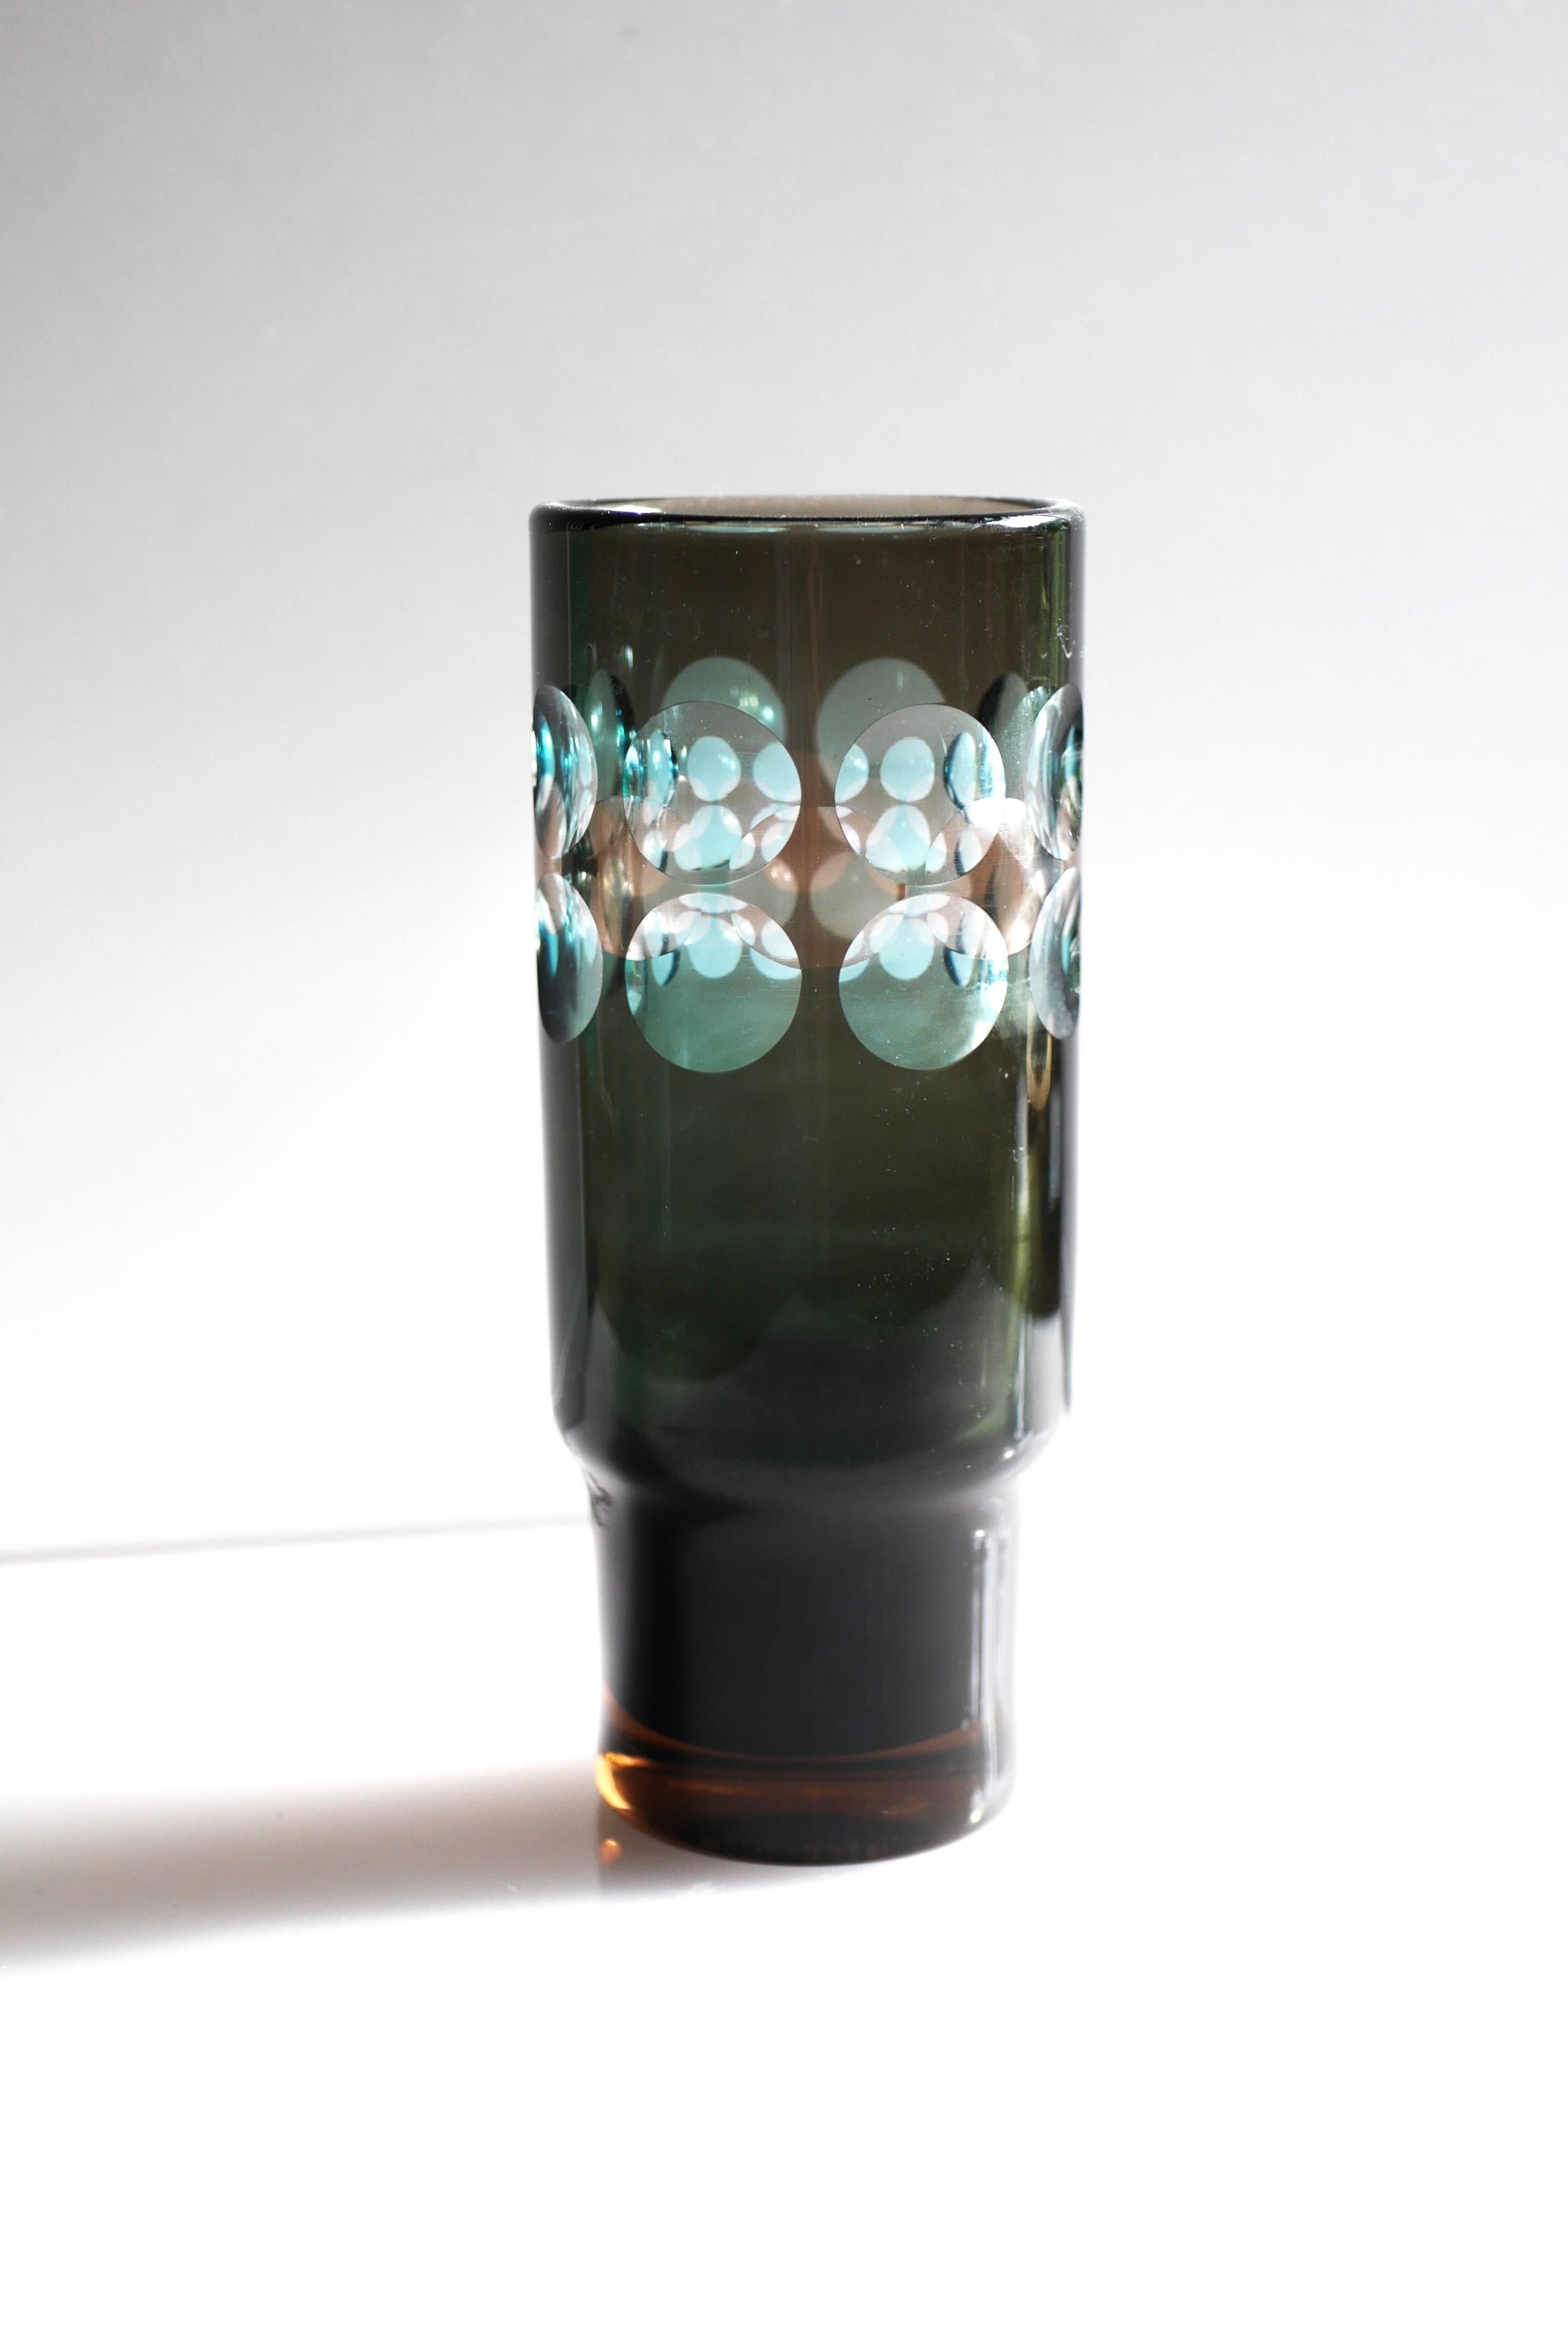 Crystal glass vase made and signed by Ove Sandberg for Kosta Boda, Sweden 1